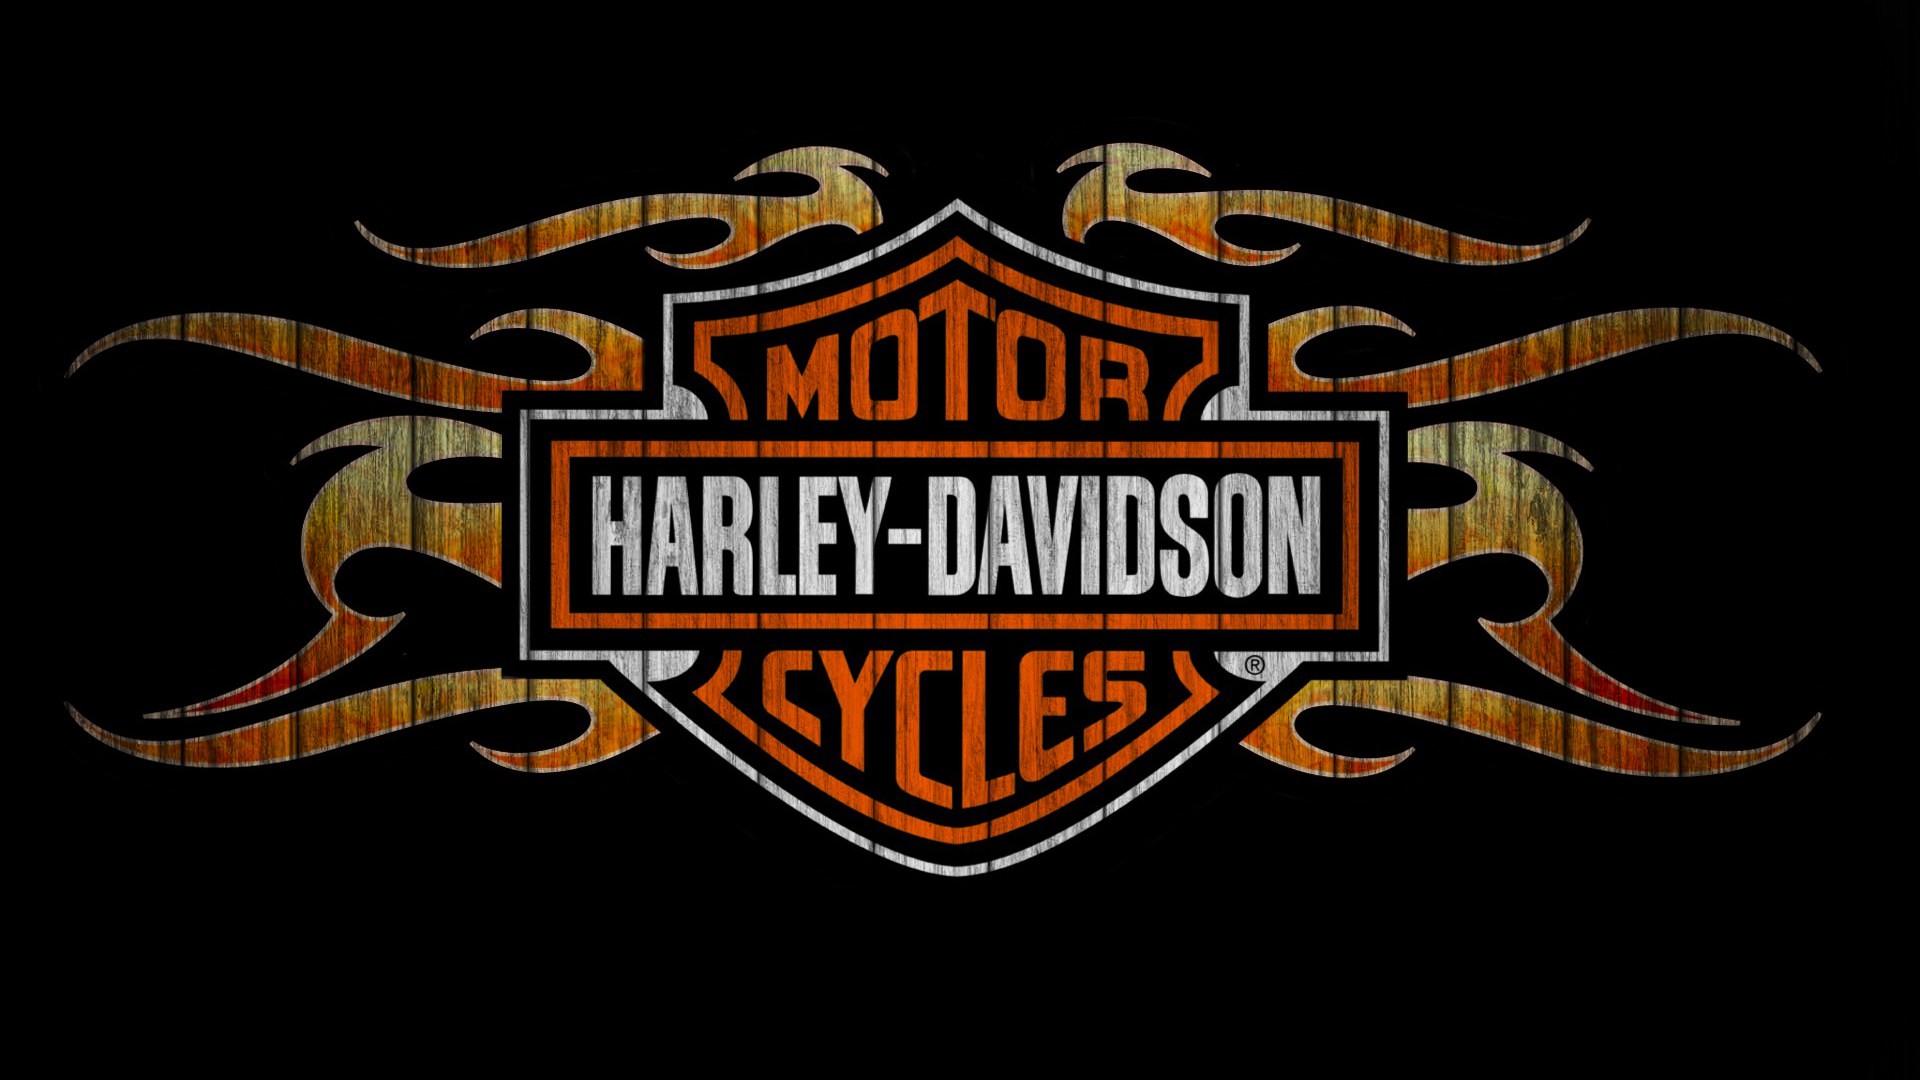 Harley davidson logo wallpaper jpg